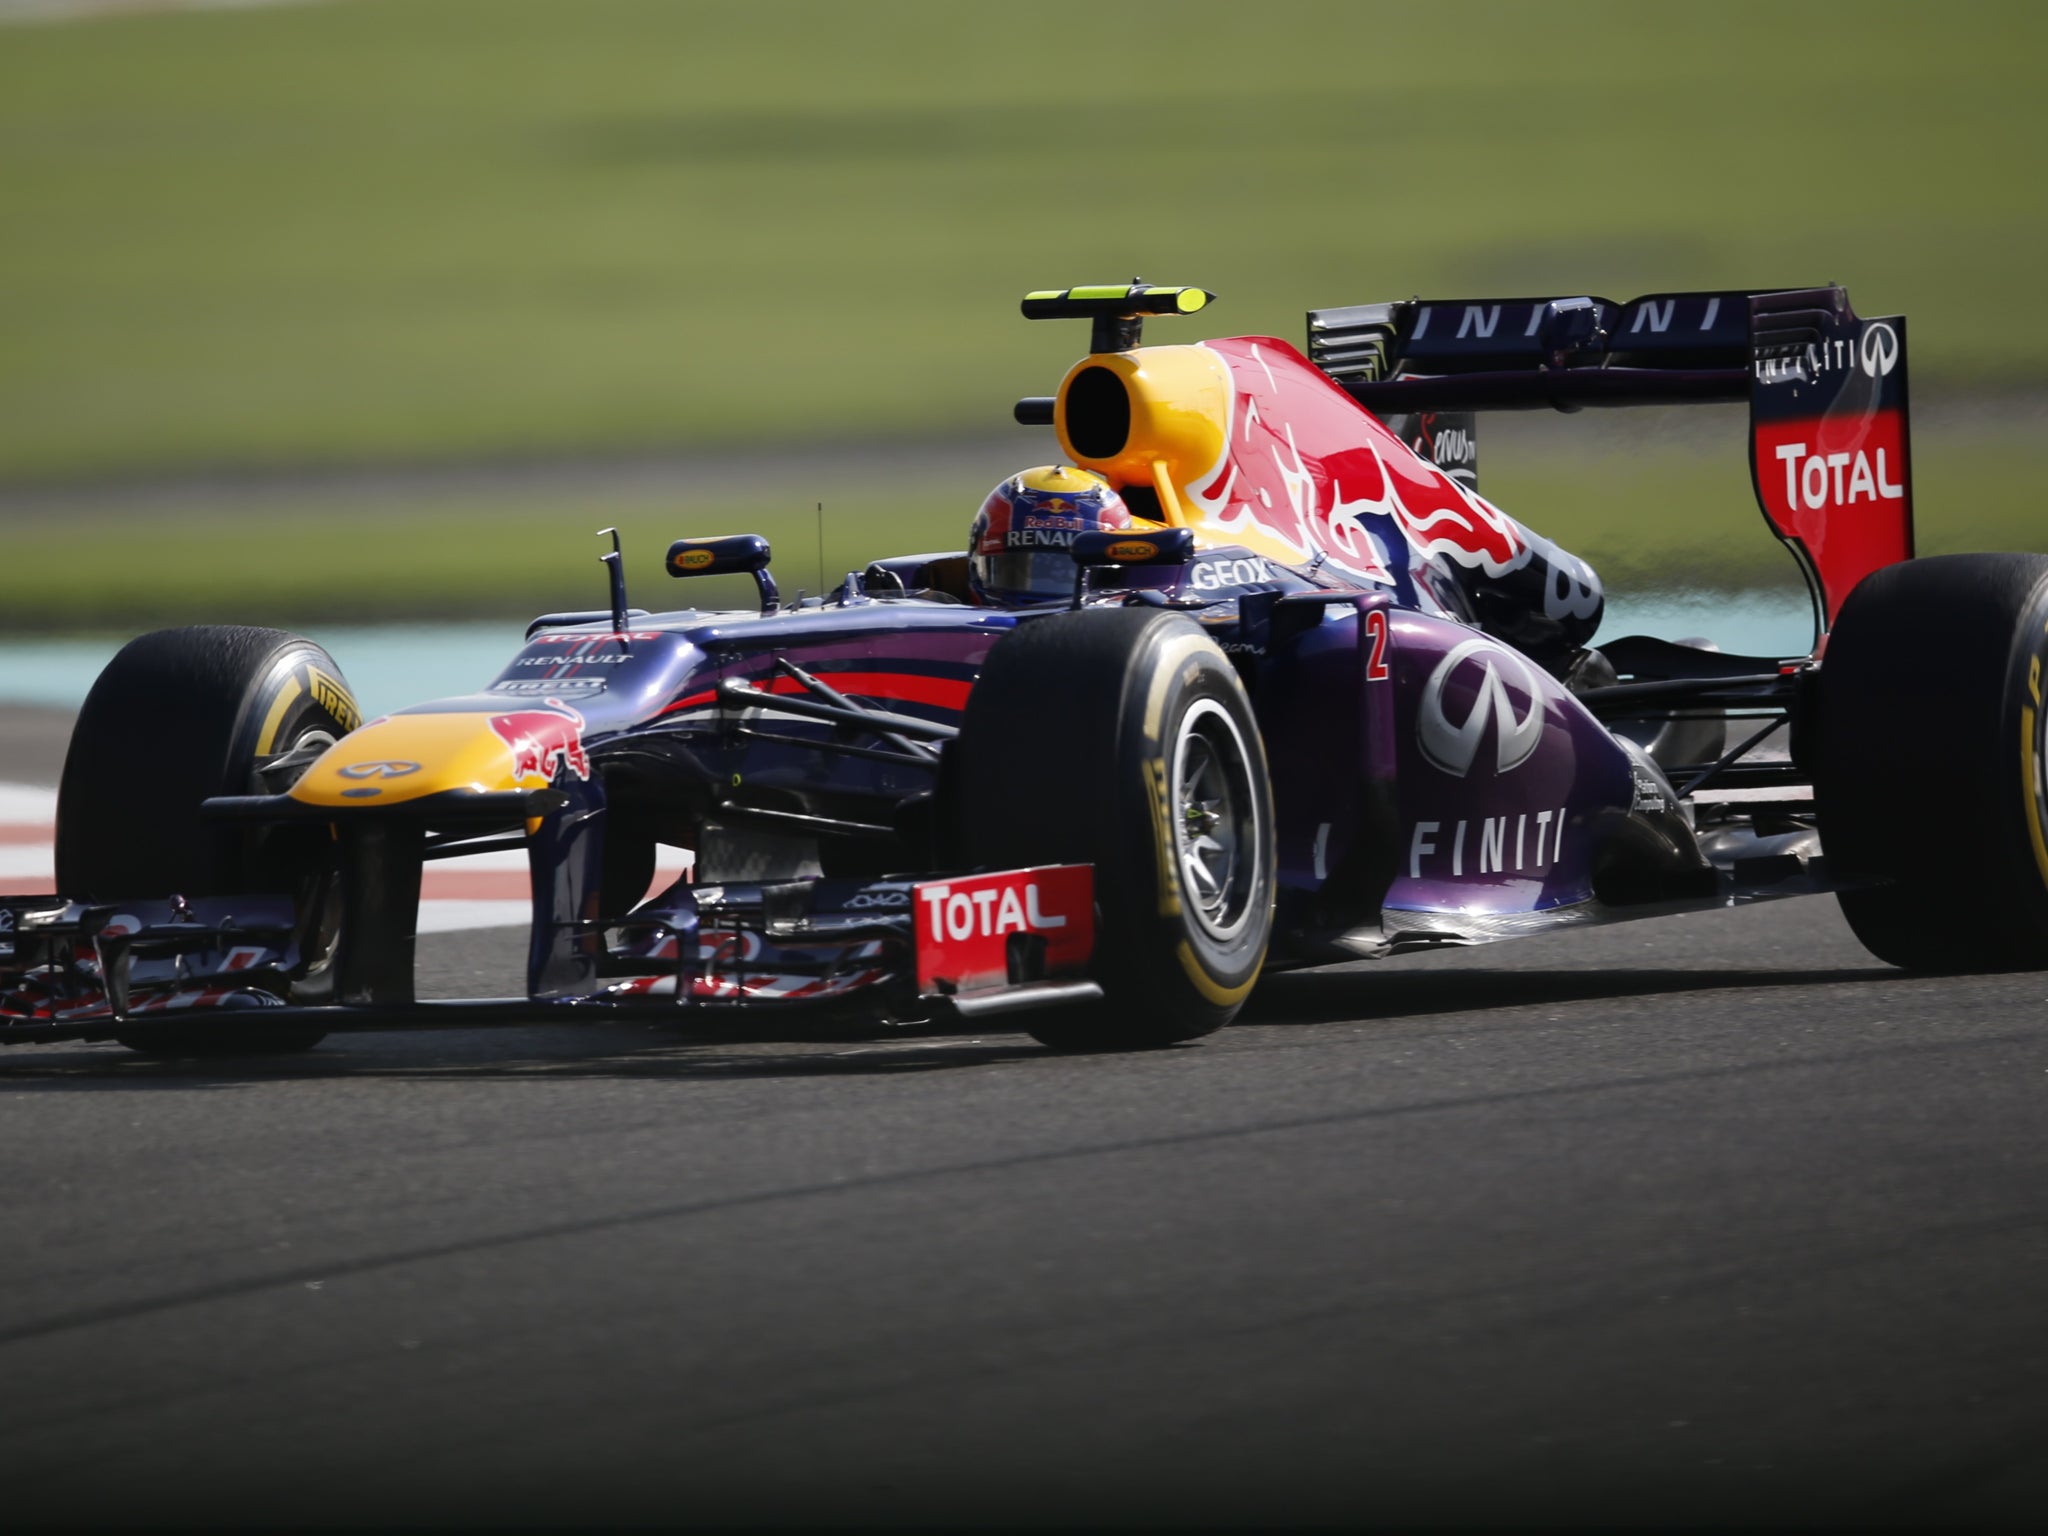 Australian Mark Webber will race in his final F1 grand prix in Brazil on Sunday